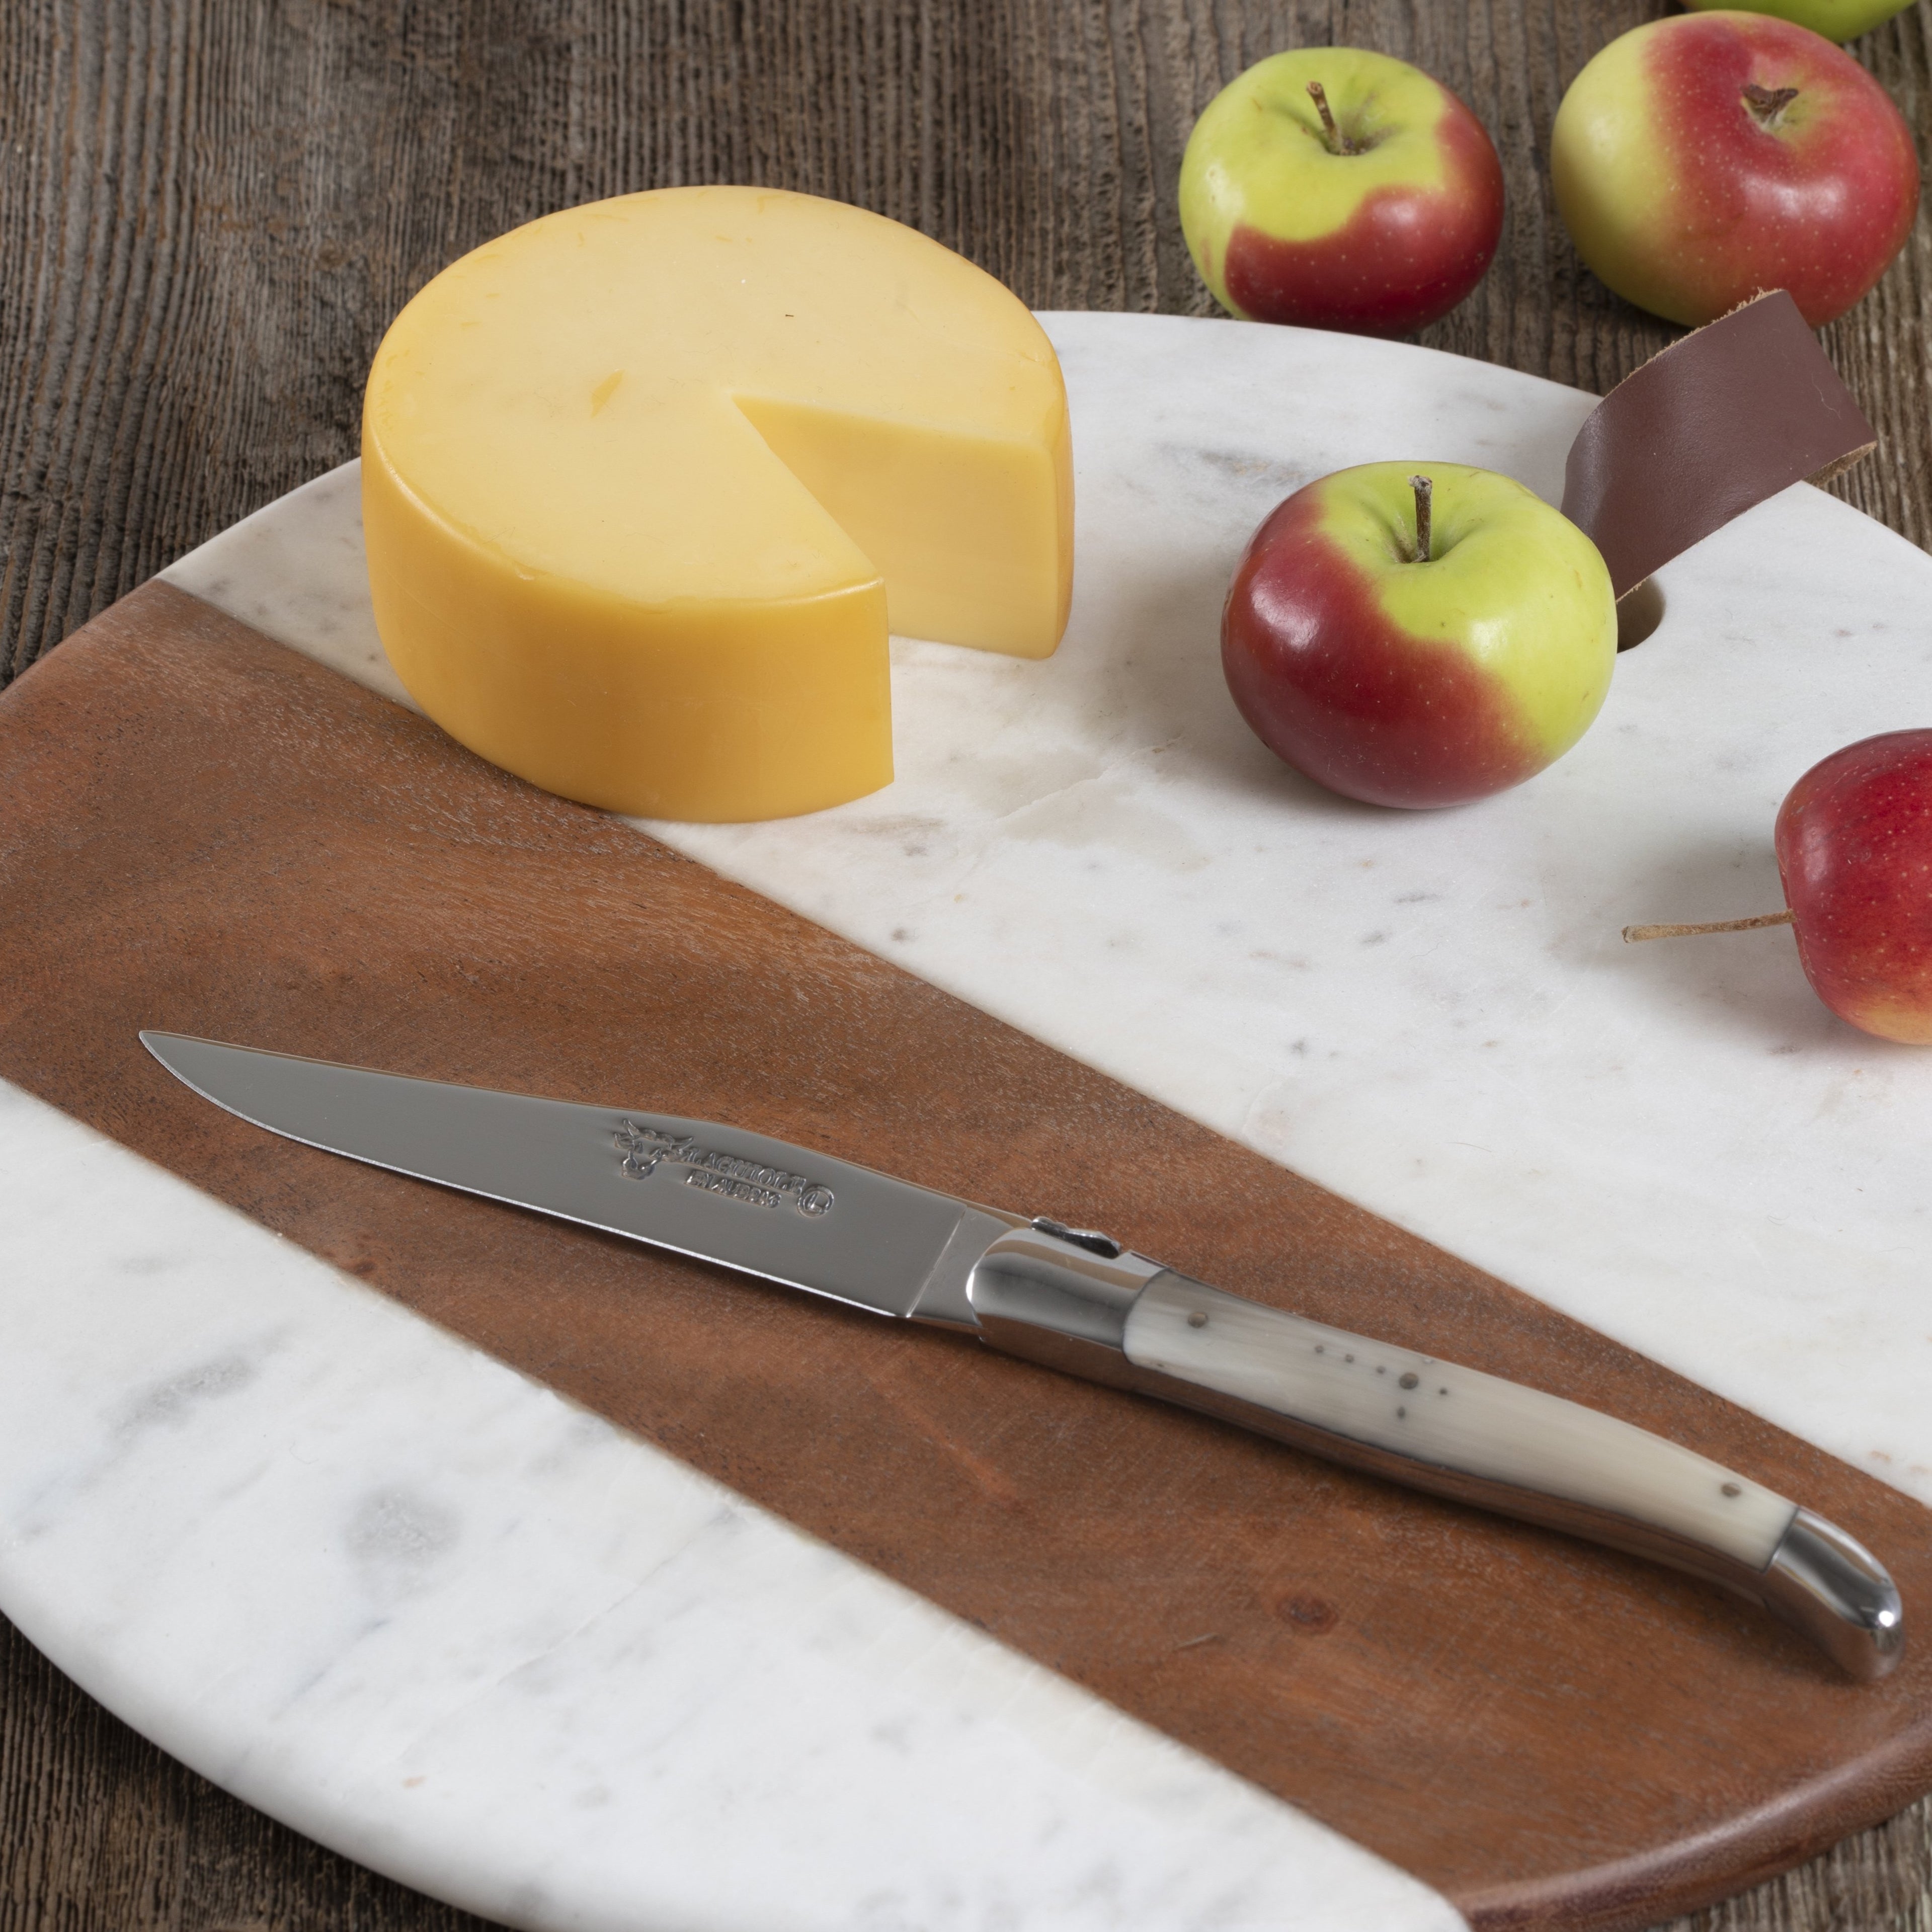 Laguiole en Aubrac Handcrafted 5-Piece Kitchen Knife Set with